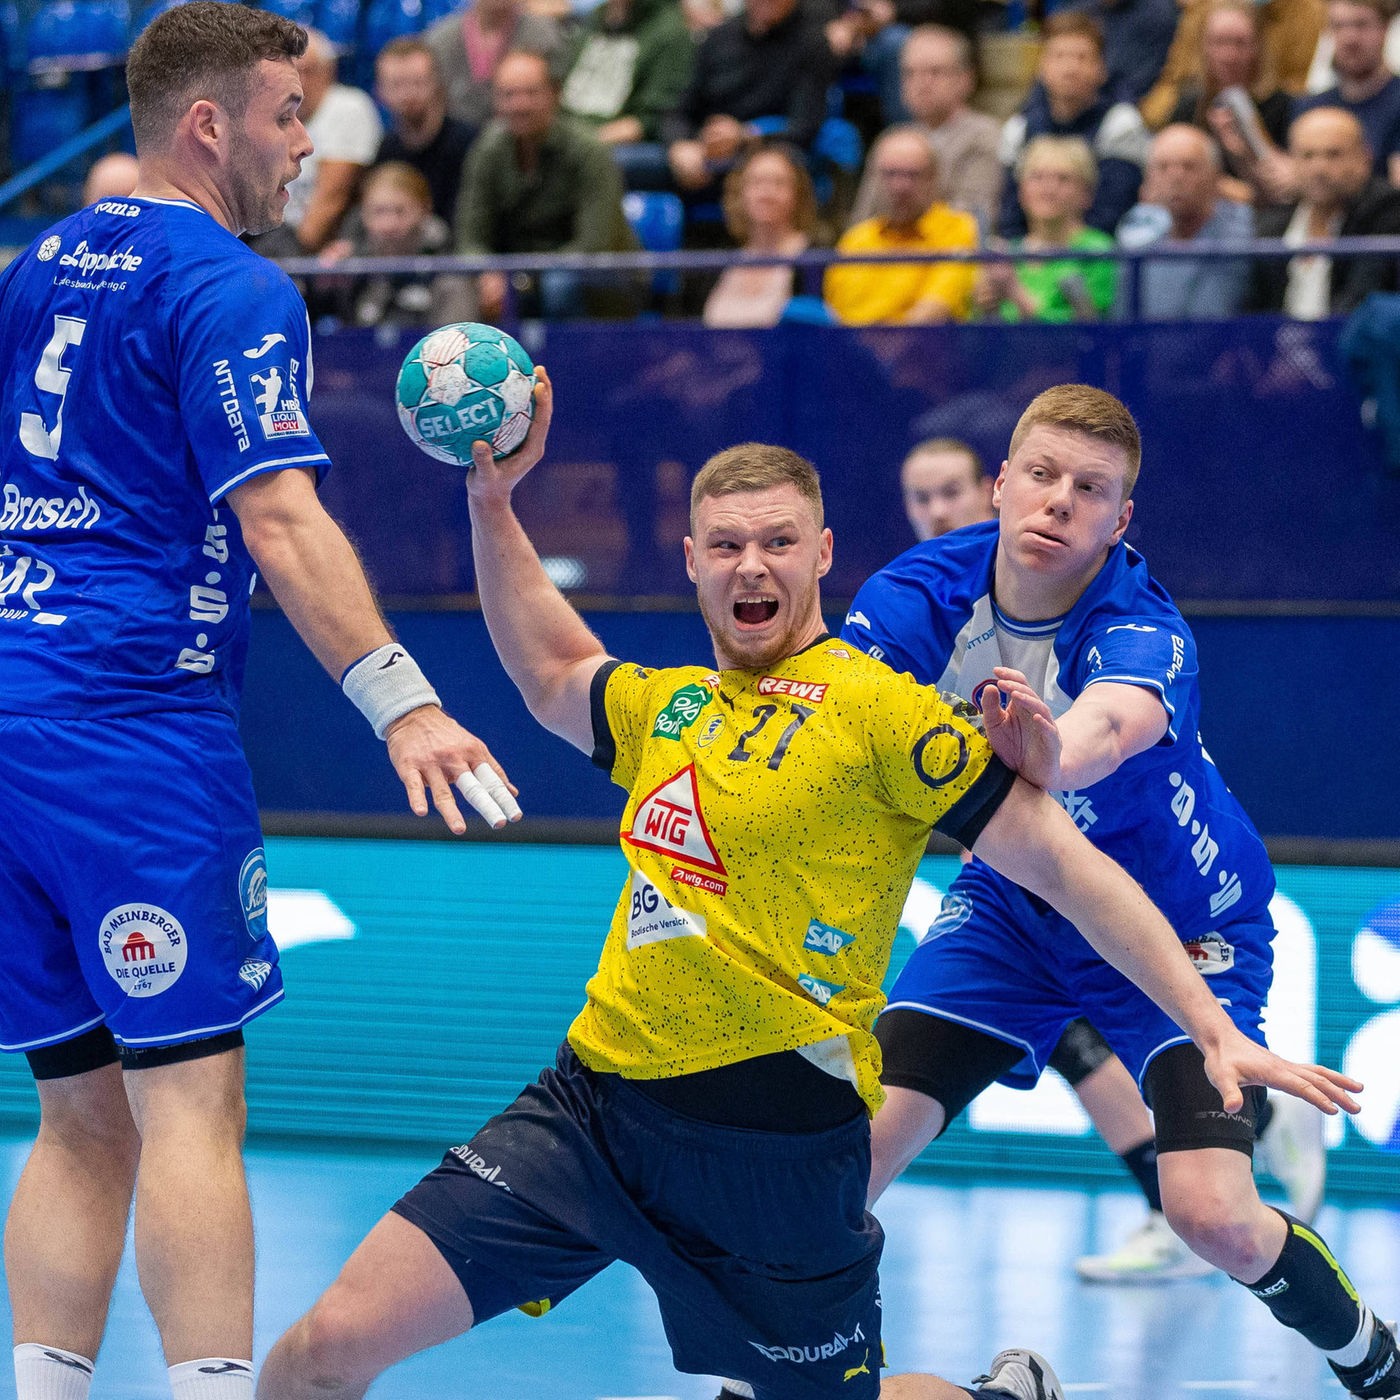 Handball, Bundesliga Lemgo Lippe bändigt die Löwen, Gummersbach siegt in Leipzig - Handball - Sport